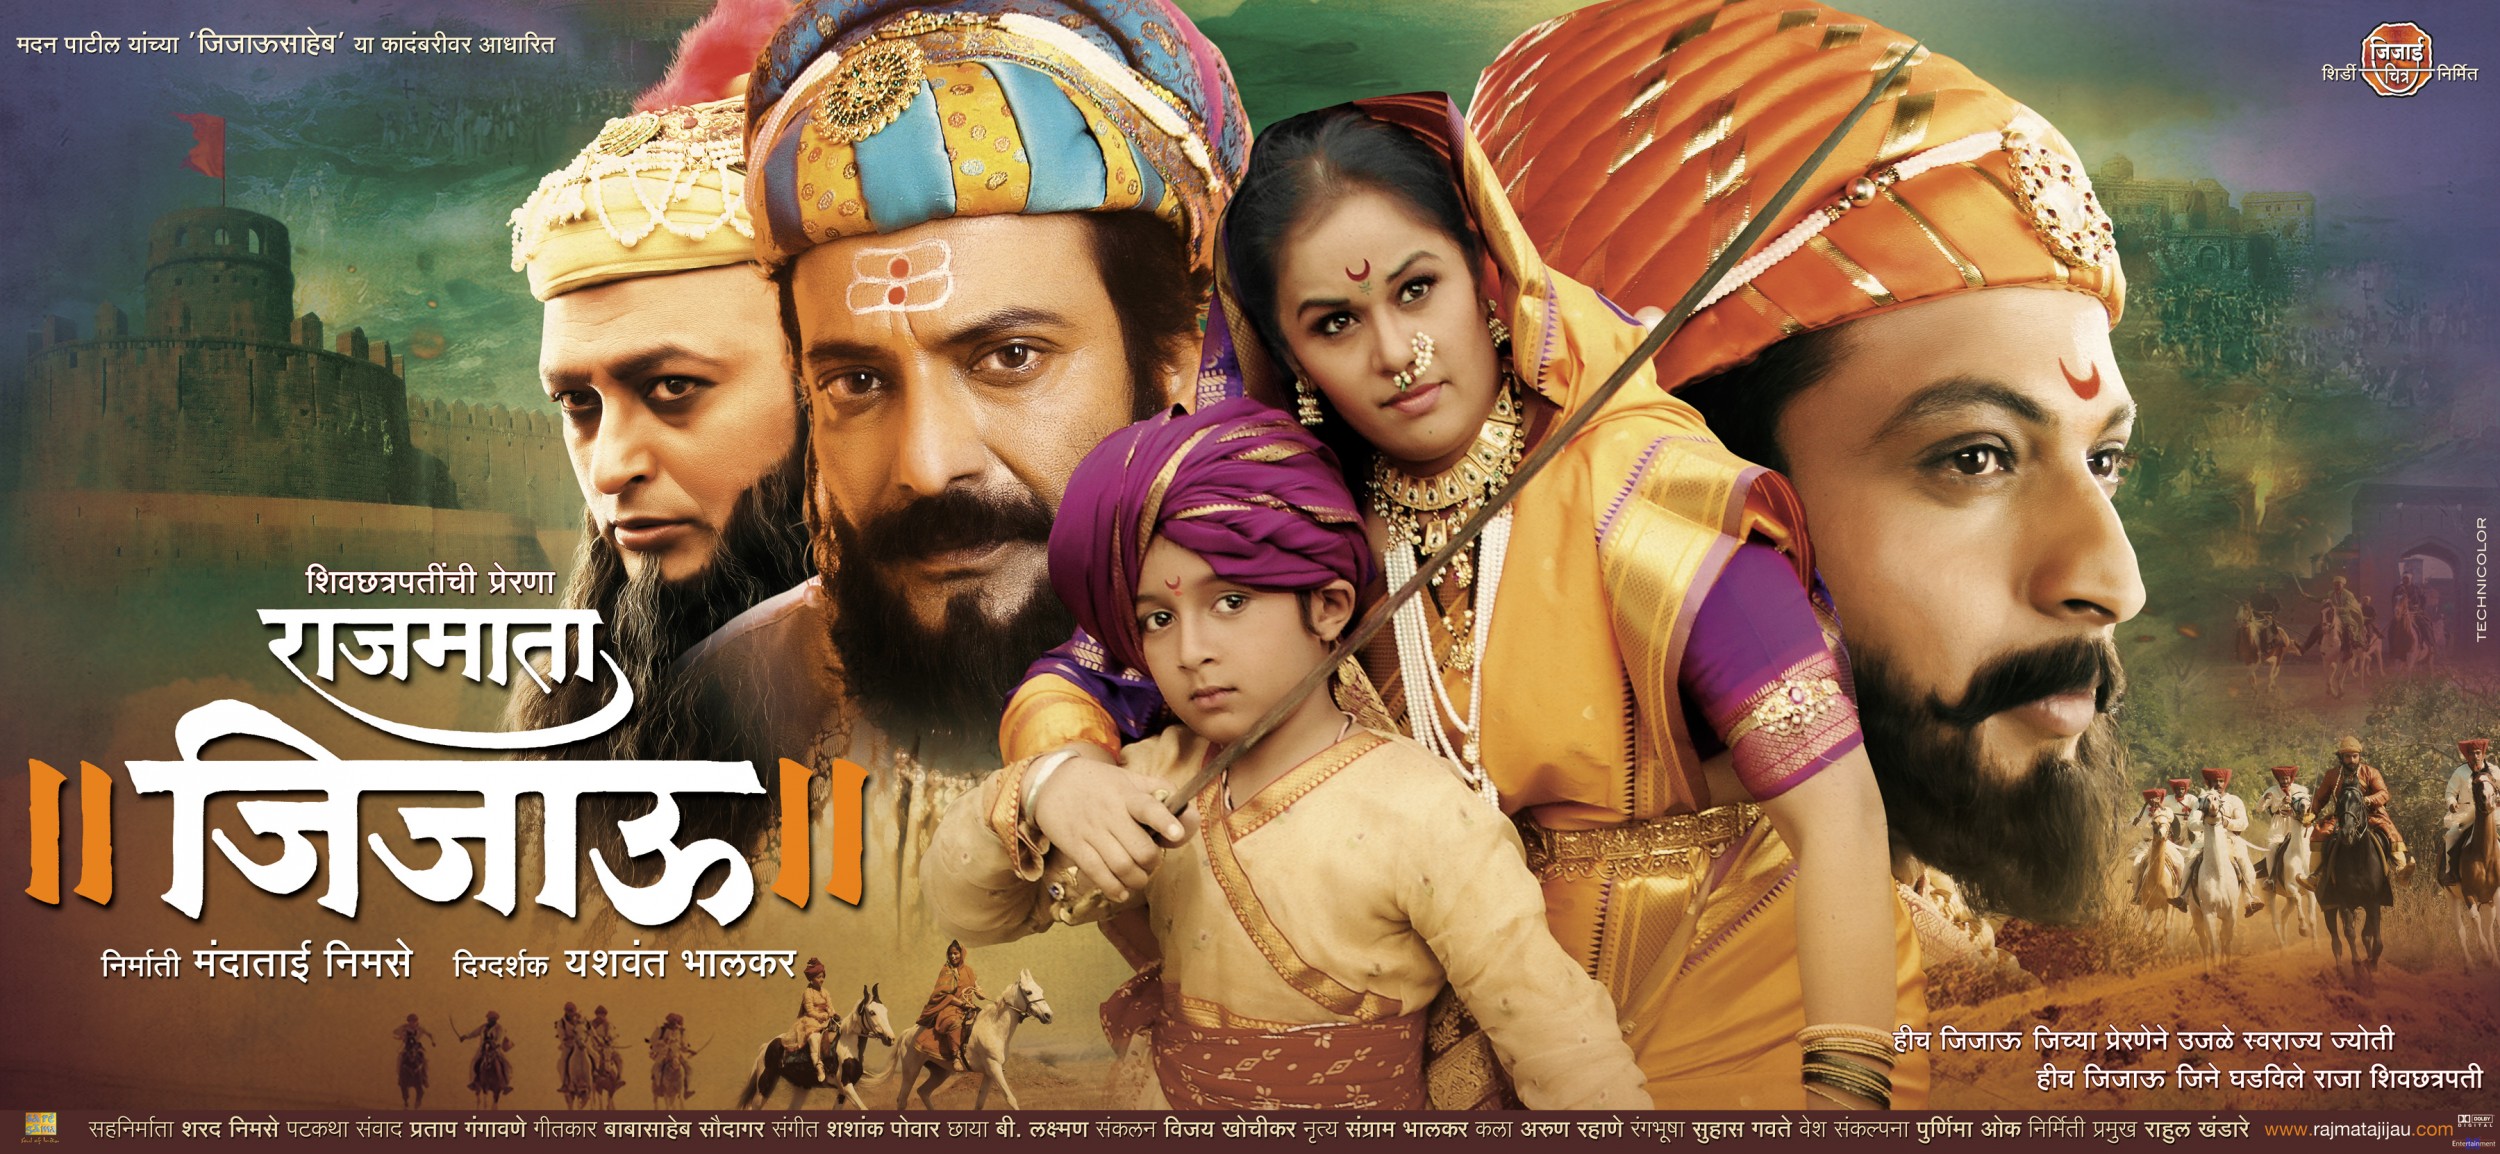 Mega Sized Movie Poster Image for Rajmata Jijau (#4 of 5)